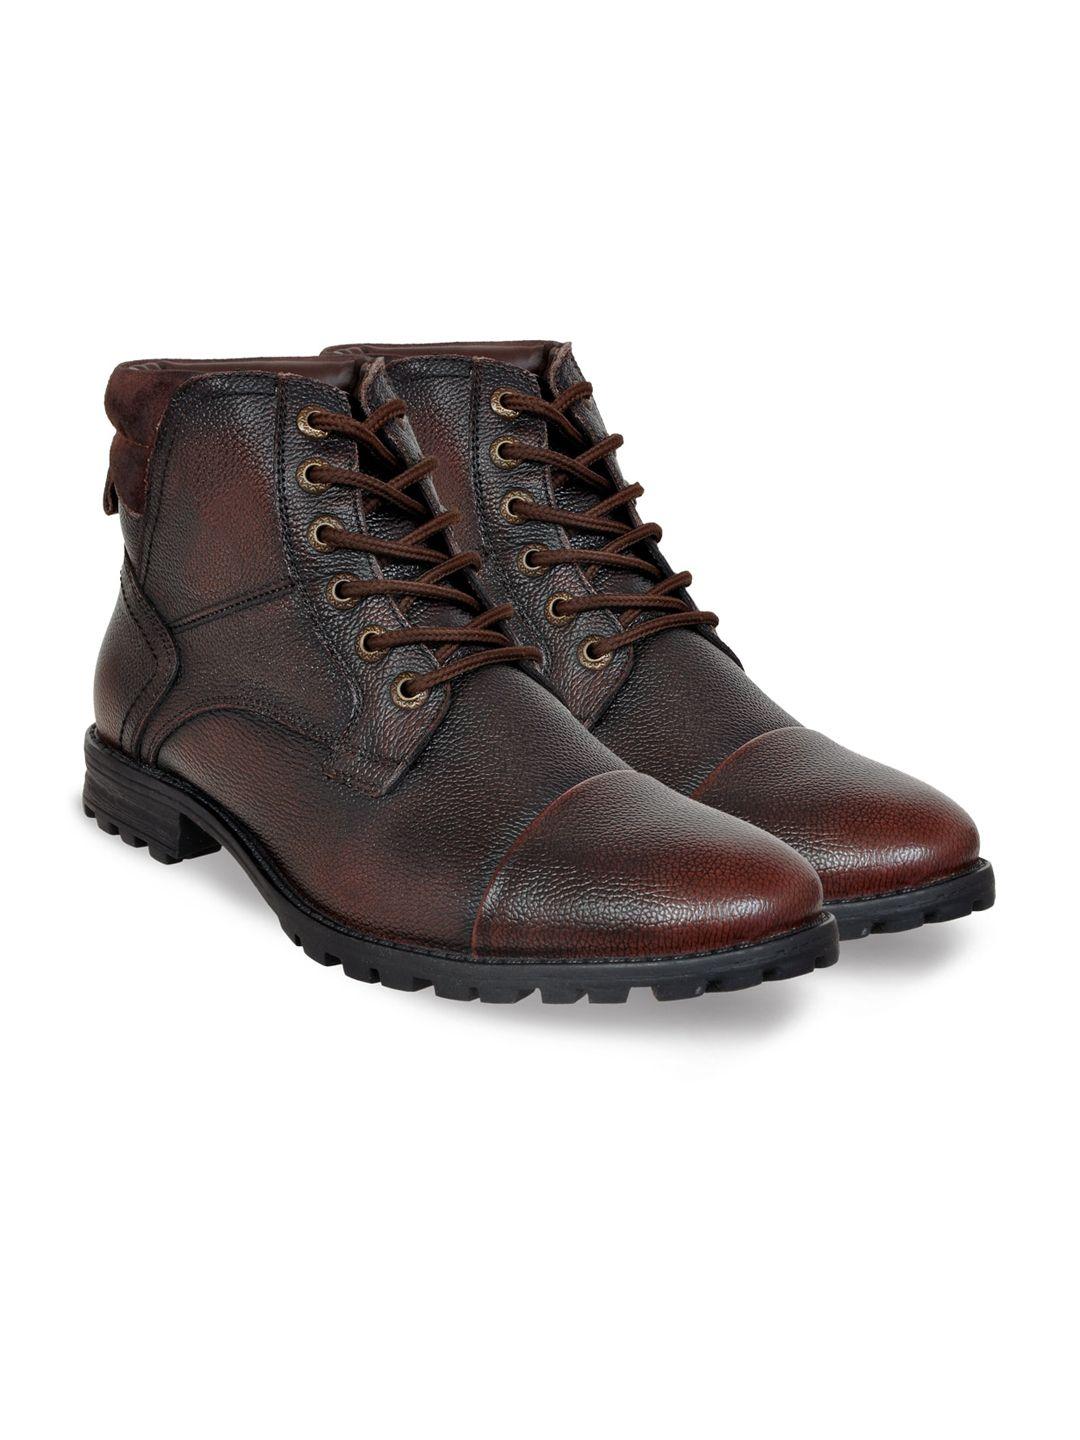 kicksfire men textured genuine leather regular boots